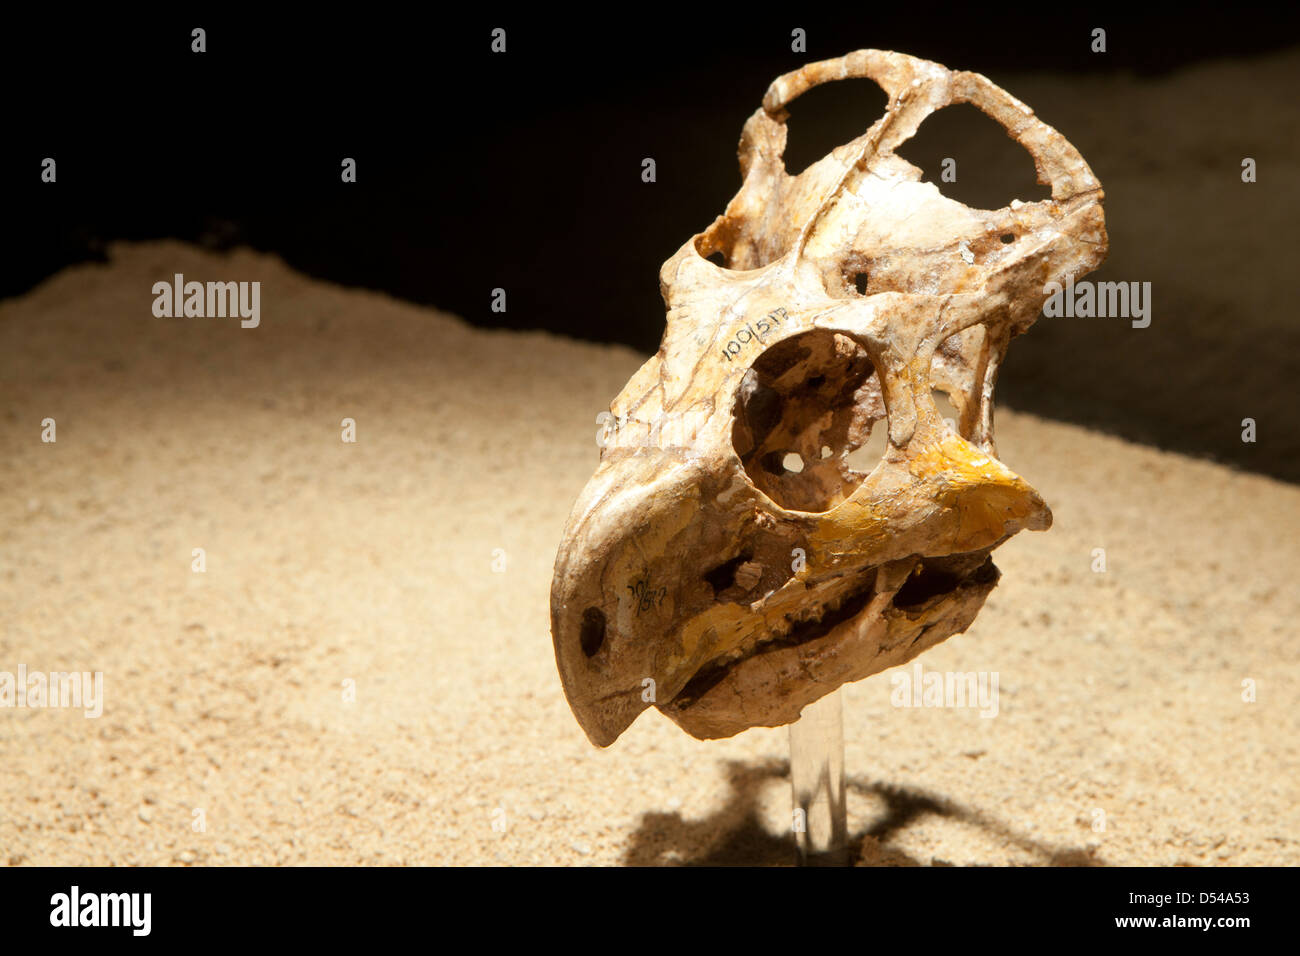 Skull of young Protoceratops, Exposition of Dinosaurs from Gobi desert in Mongolia. Cosmocaixa museum, Barcelona, Spain Stock Photo